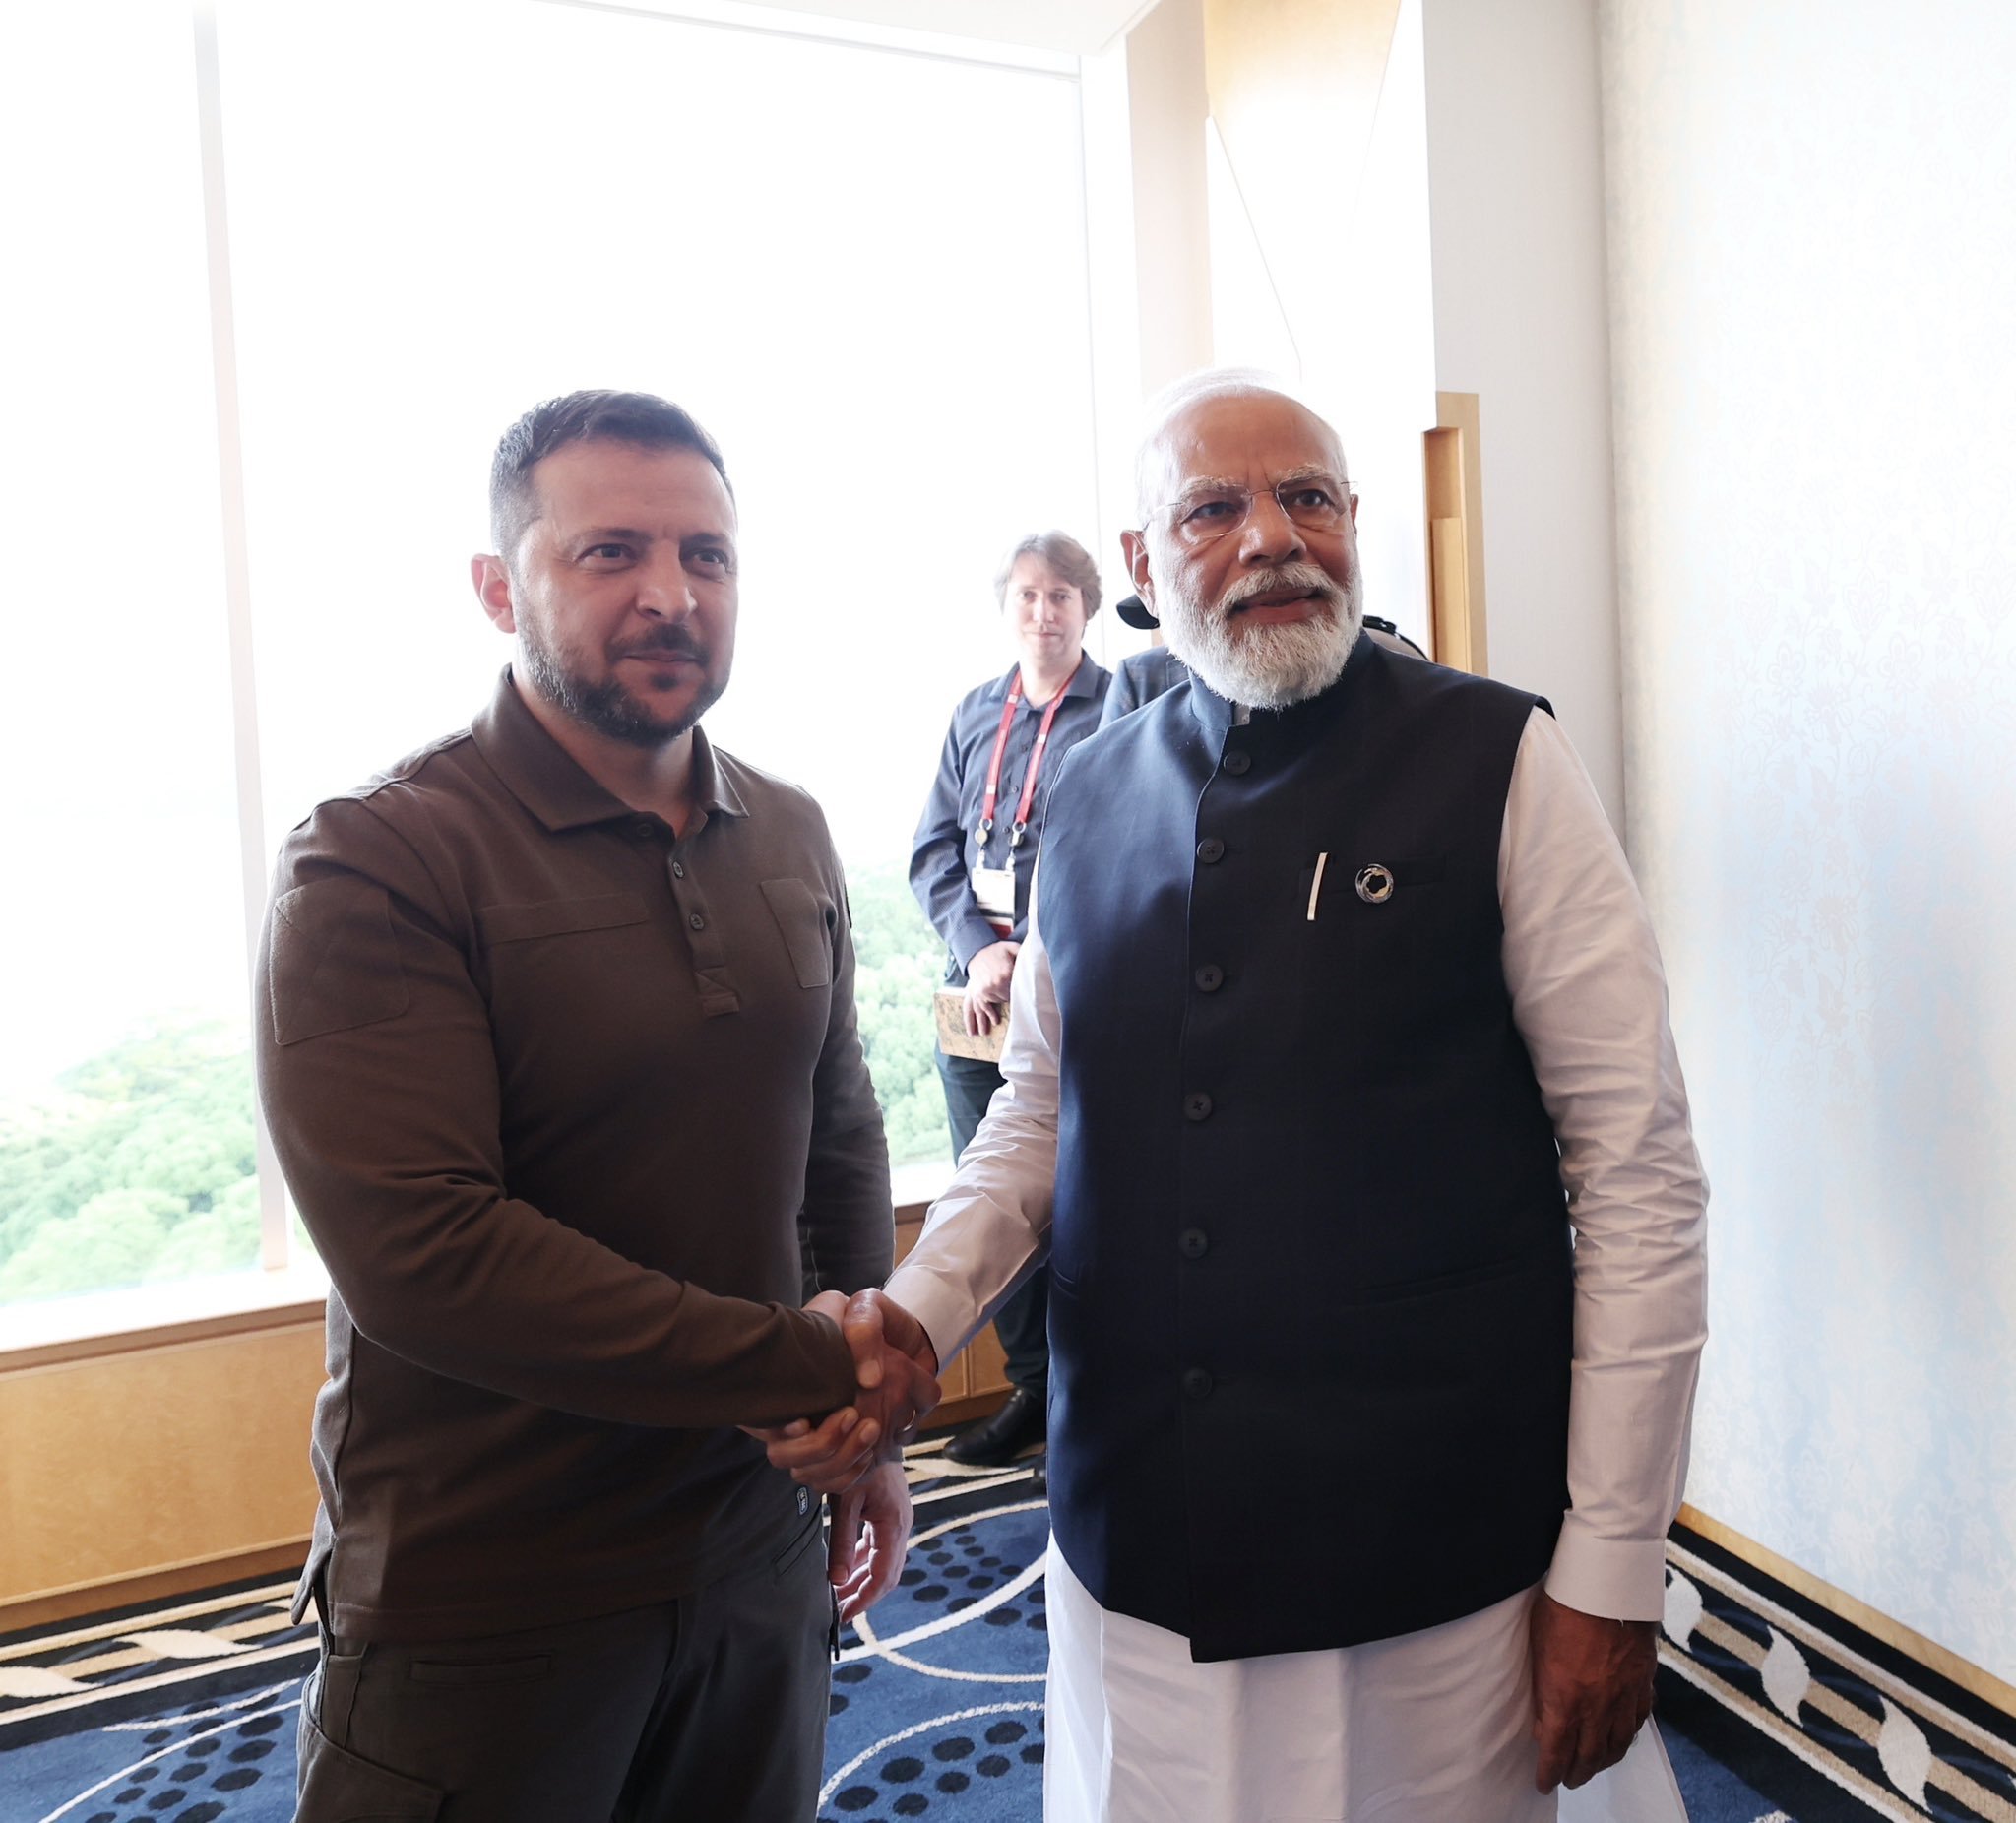 G-7: PM Modi meets Ukrainian President Zelenskyy at Hiroshima in Japan